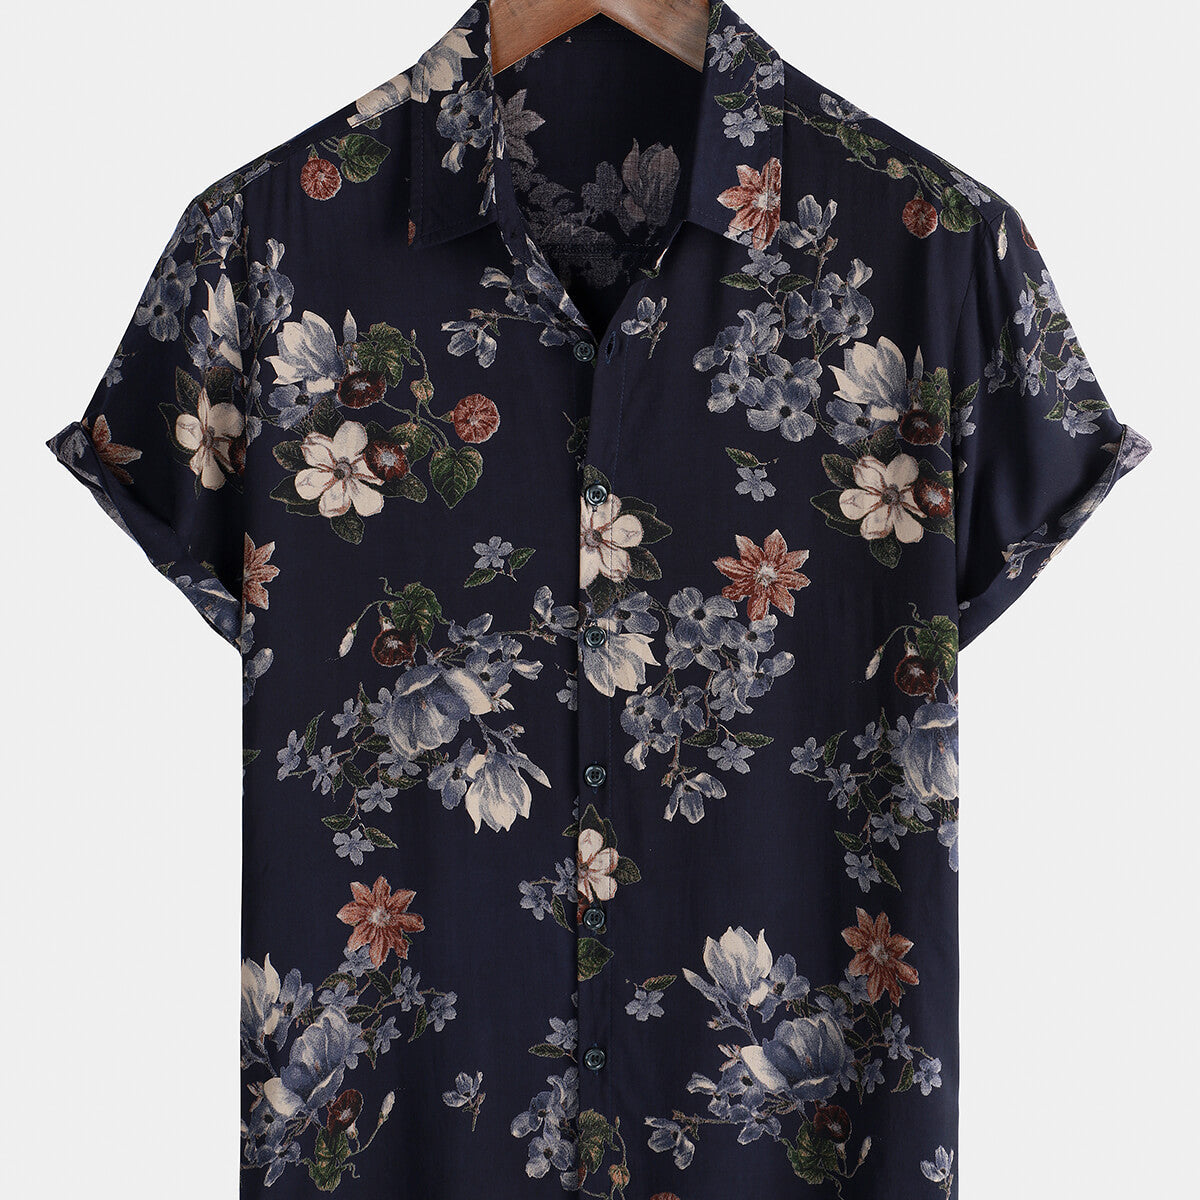 Men's Vintage Navy Blue Holiday Summer Floral Beach Rayon Short Sleeve Shirt